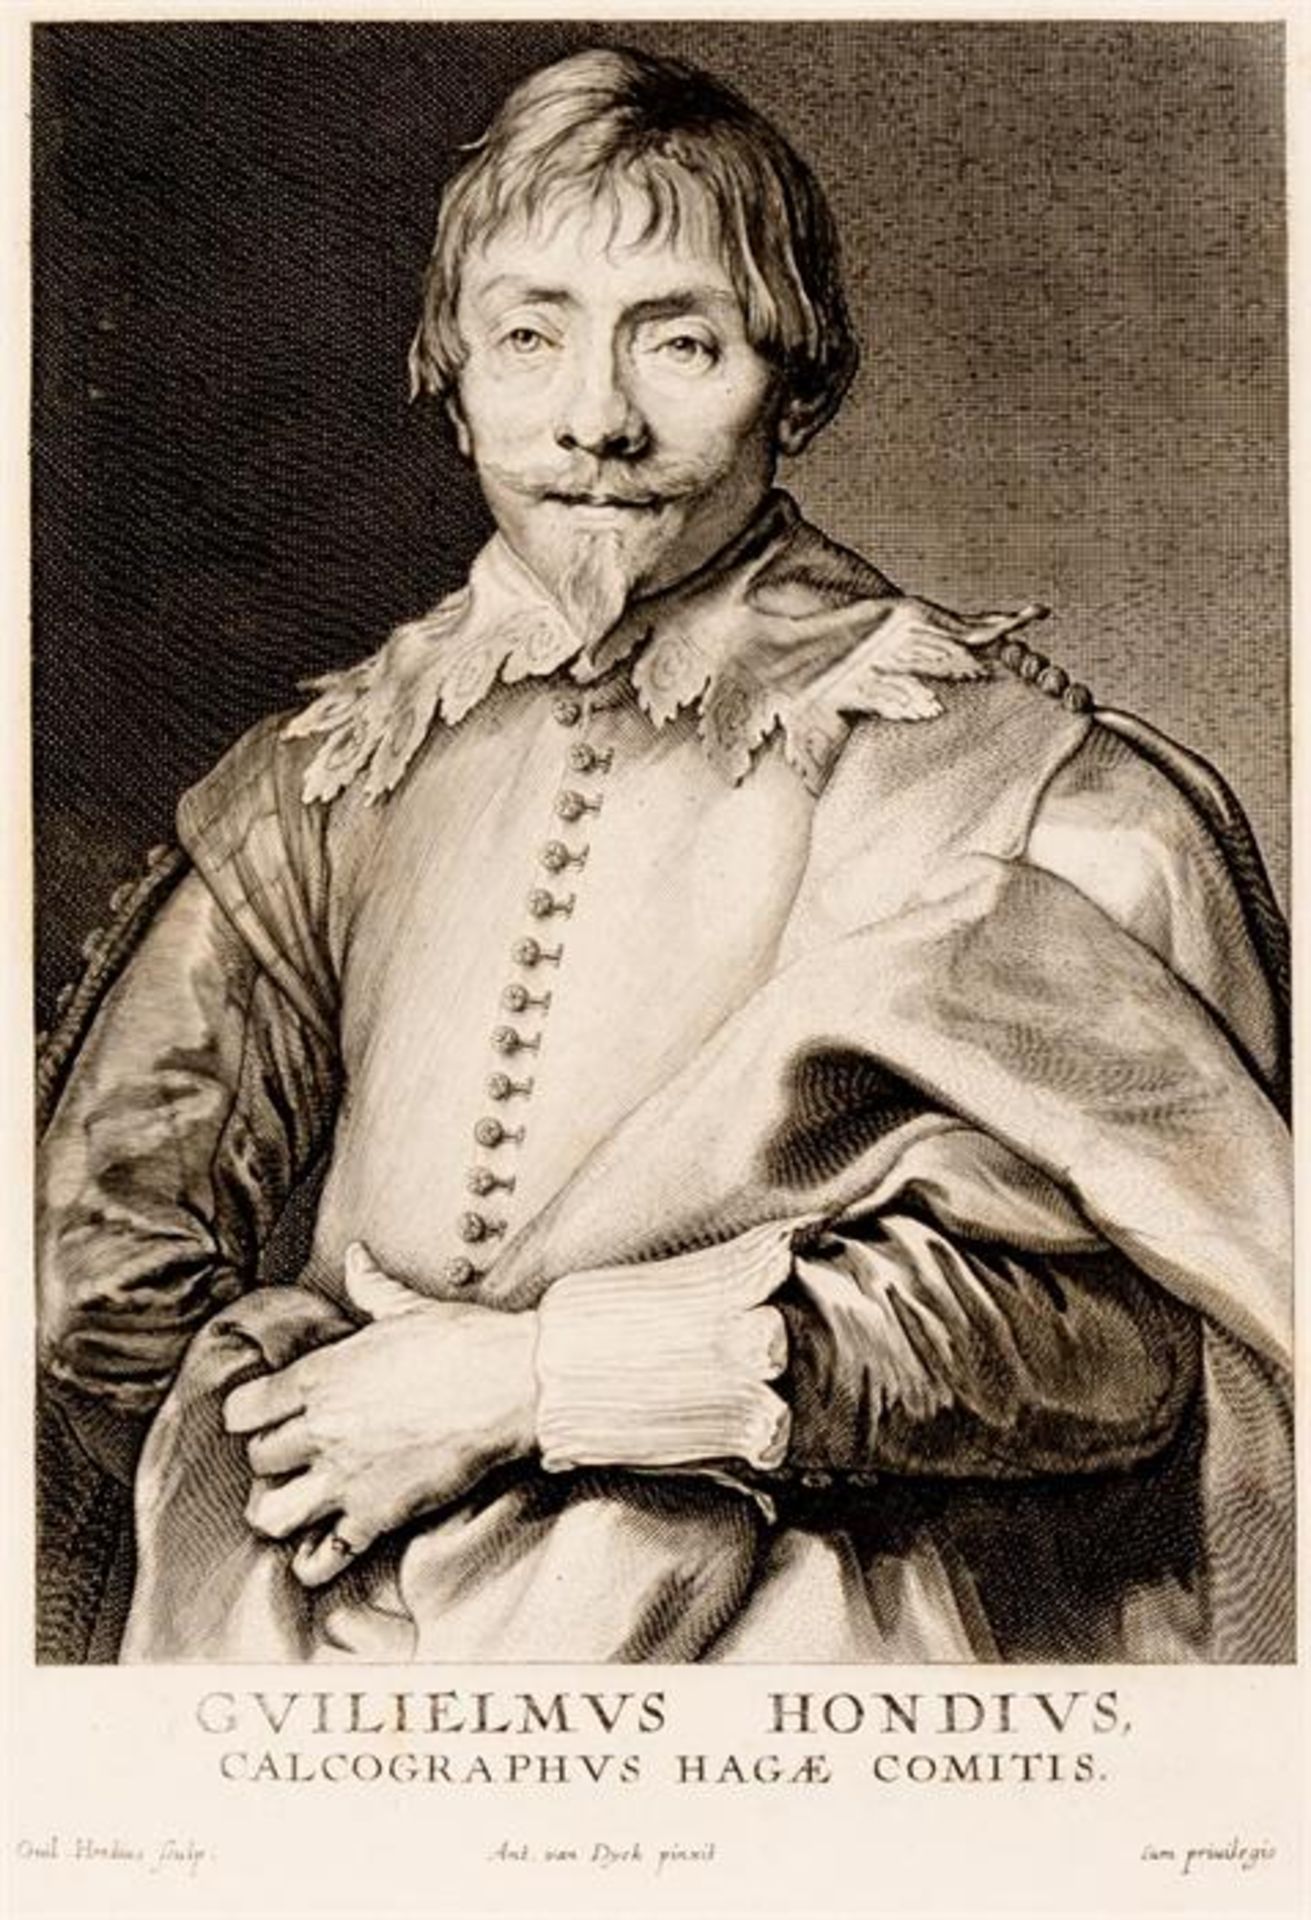 Anthonius VAN DYCK (1599-1641) und Willem HONDIUS (1597-1658)